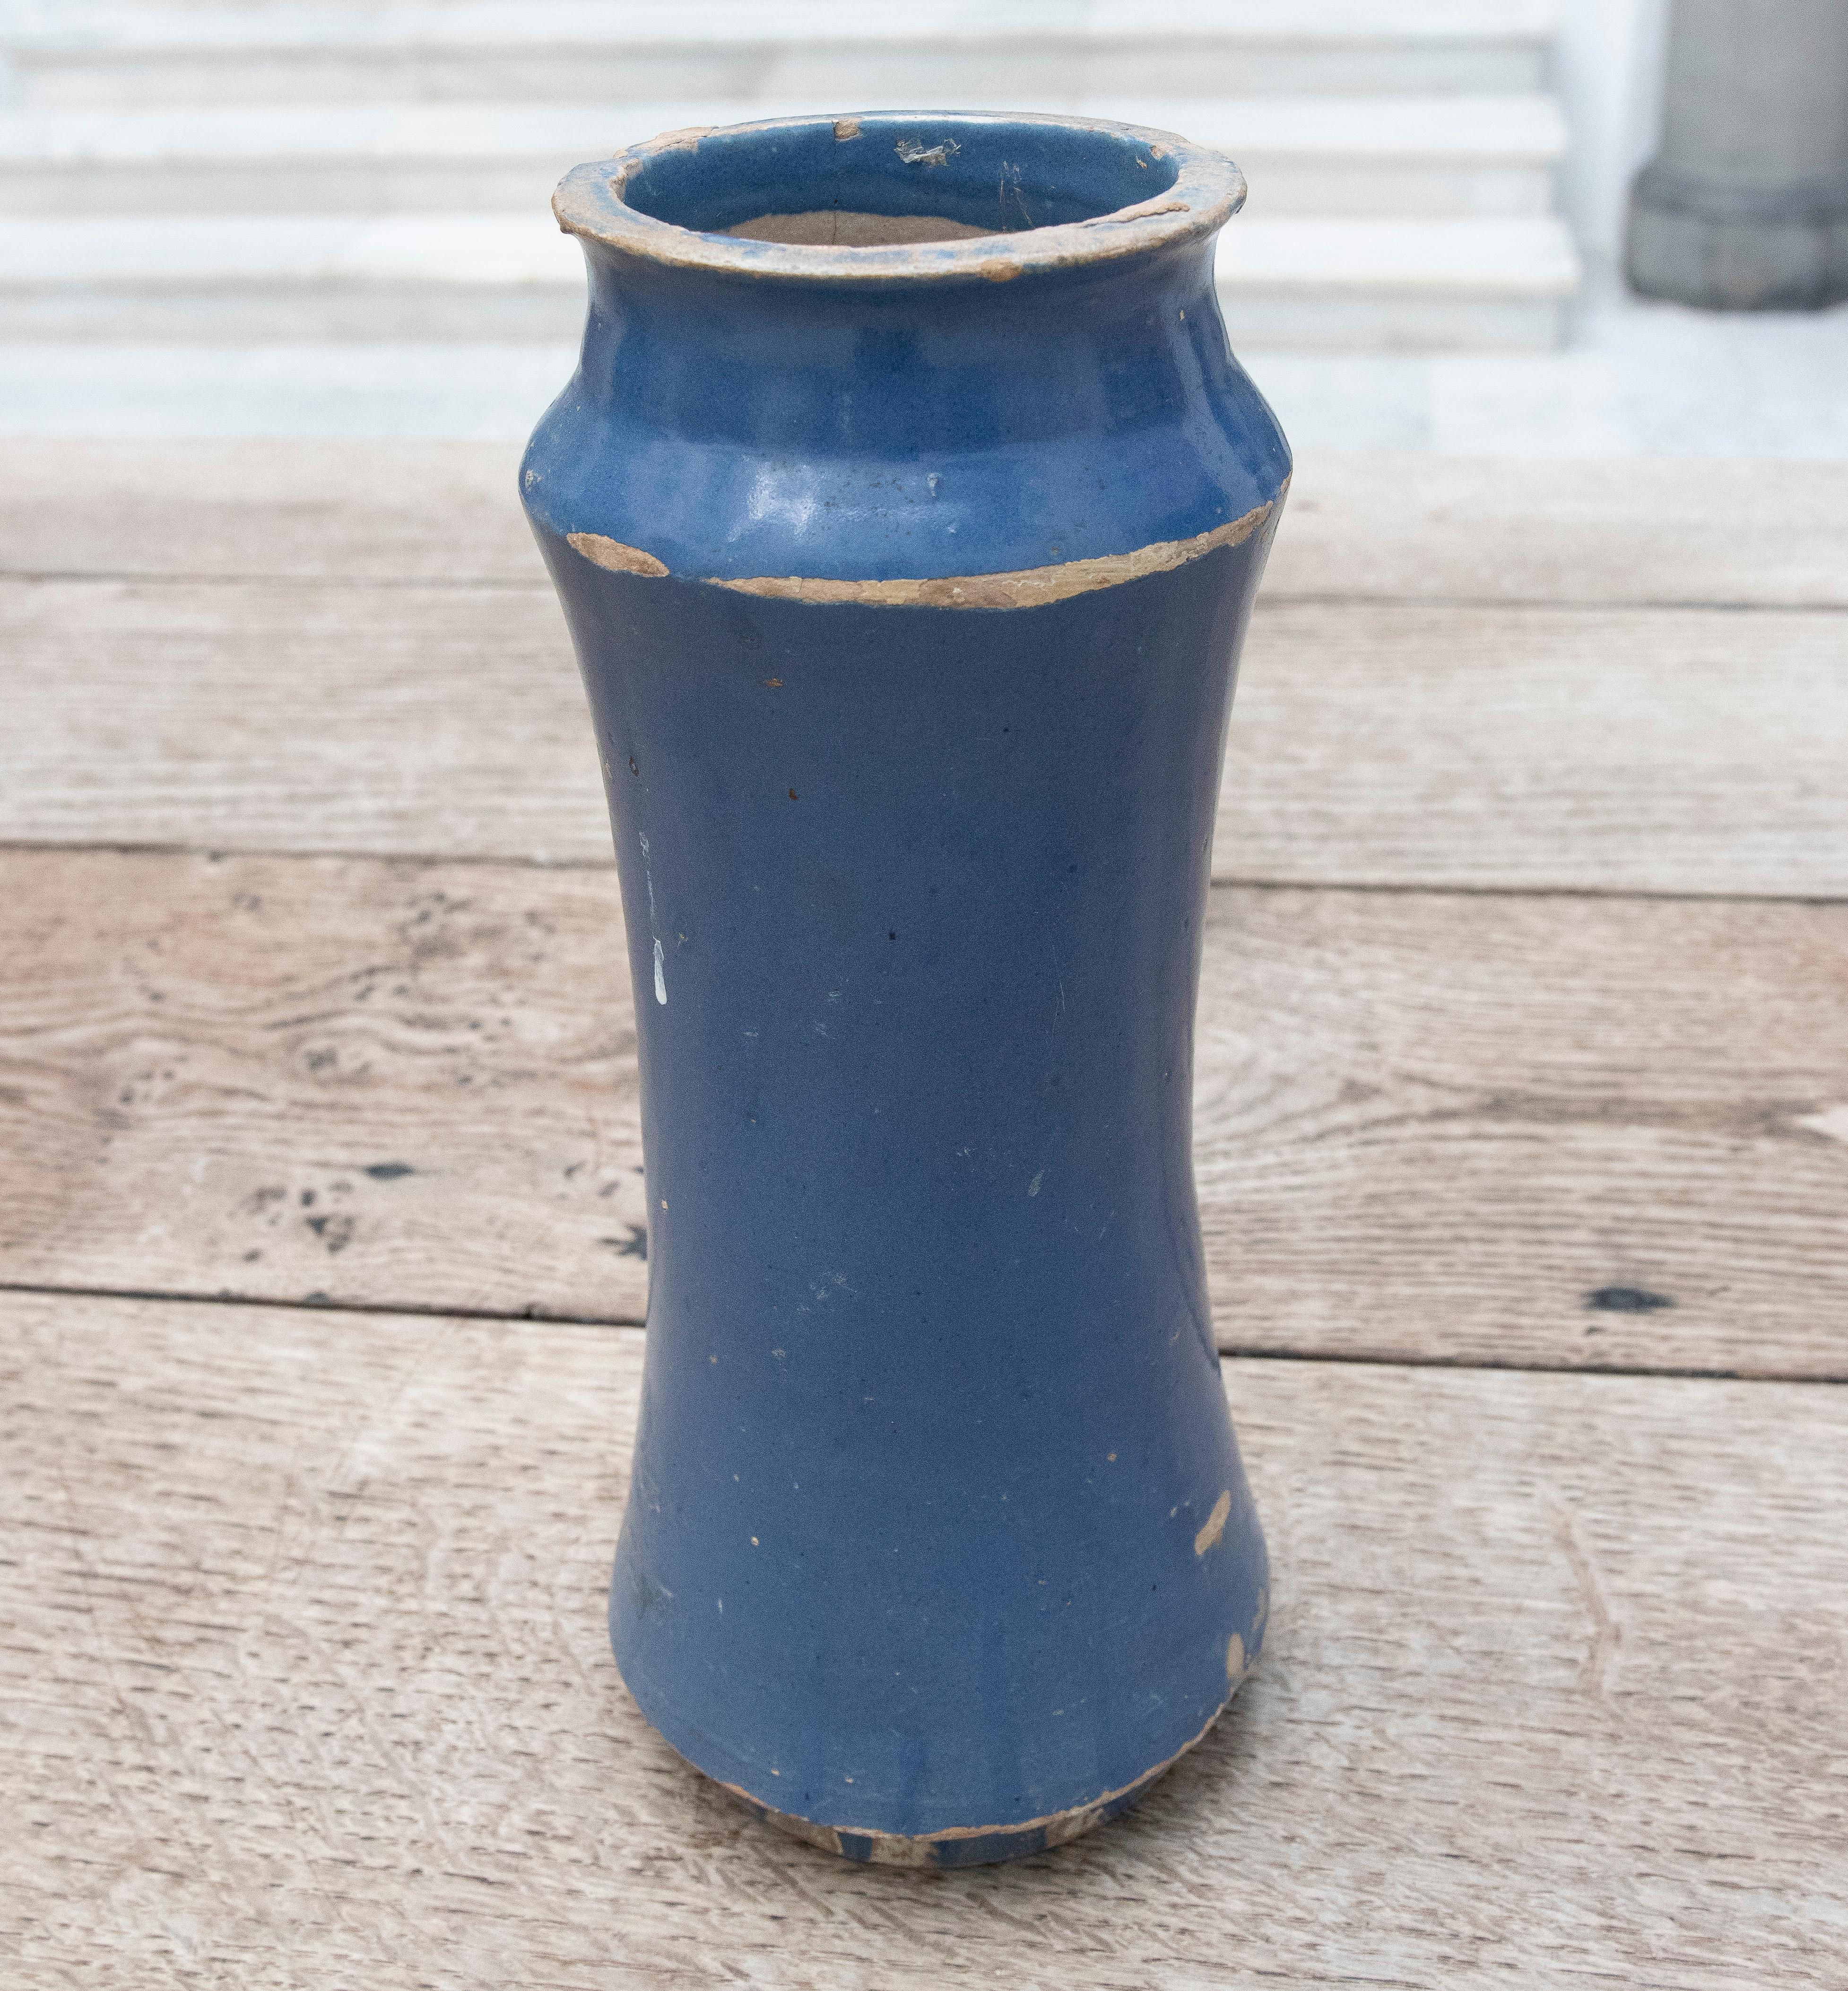 18th century Indigo blue glazed ceramic jar.